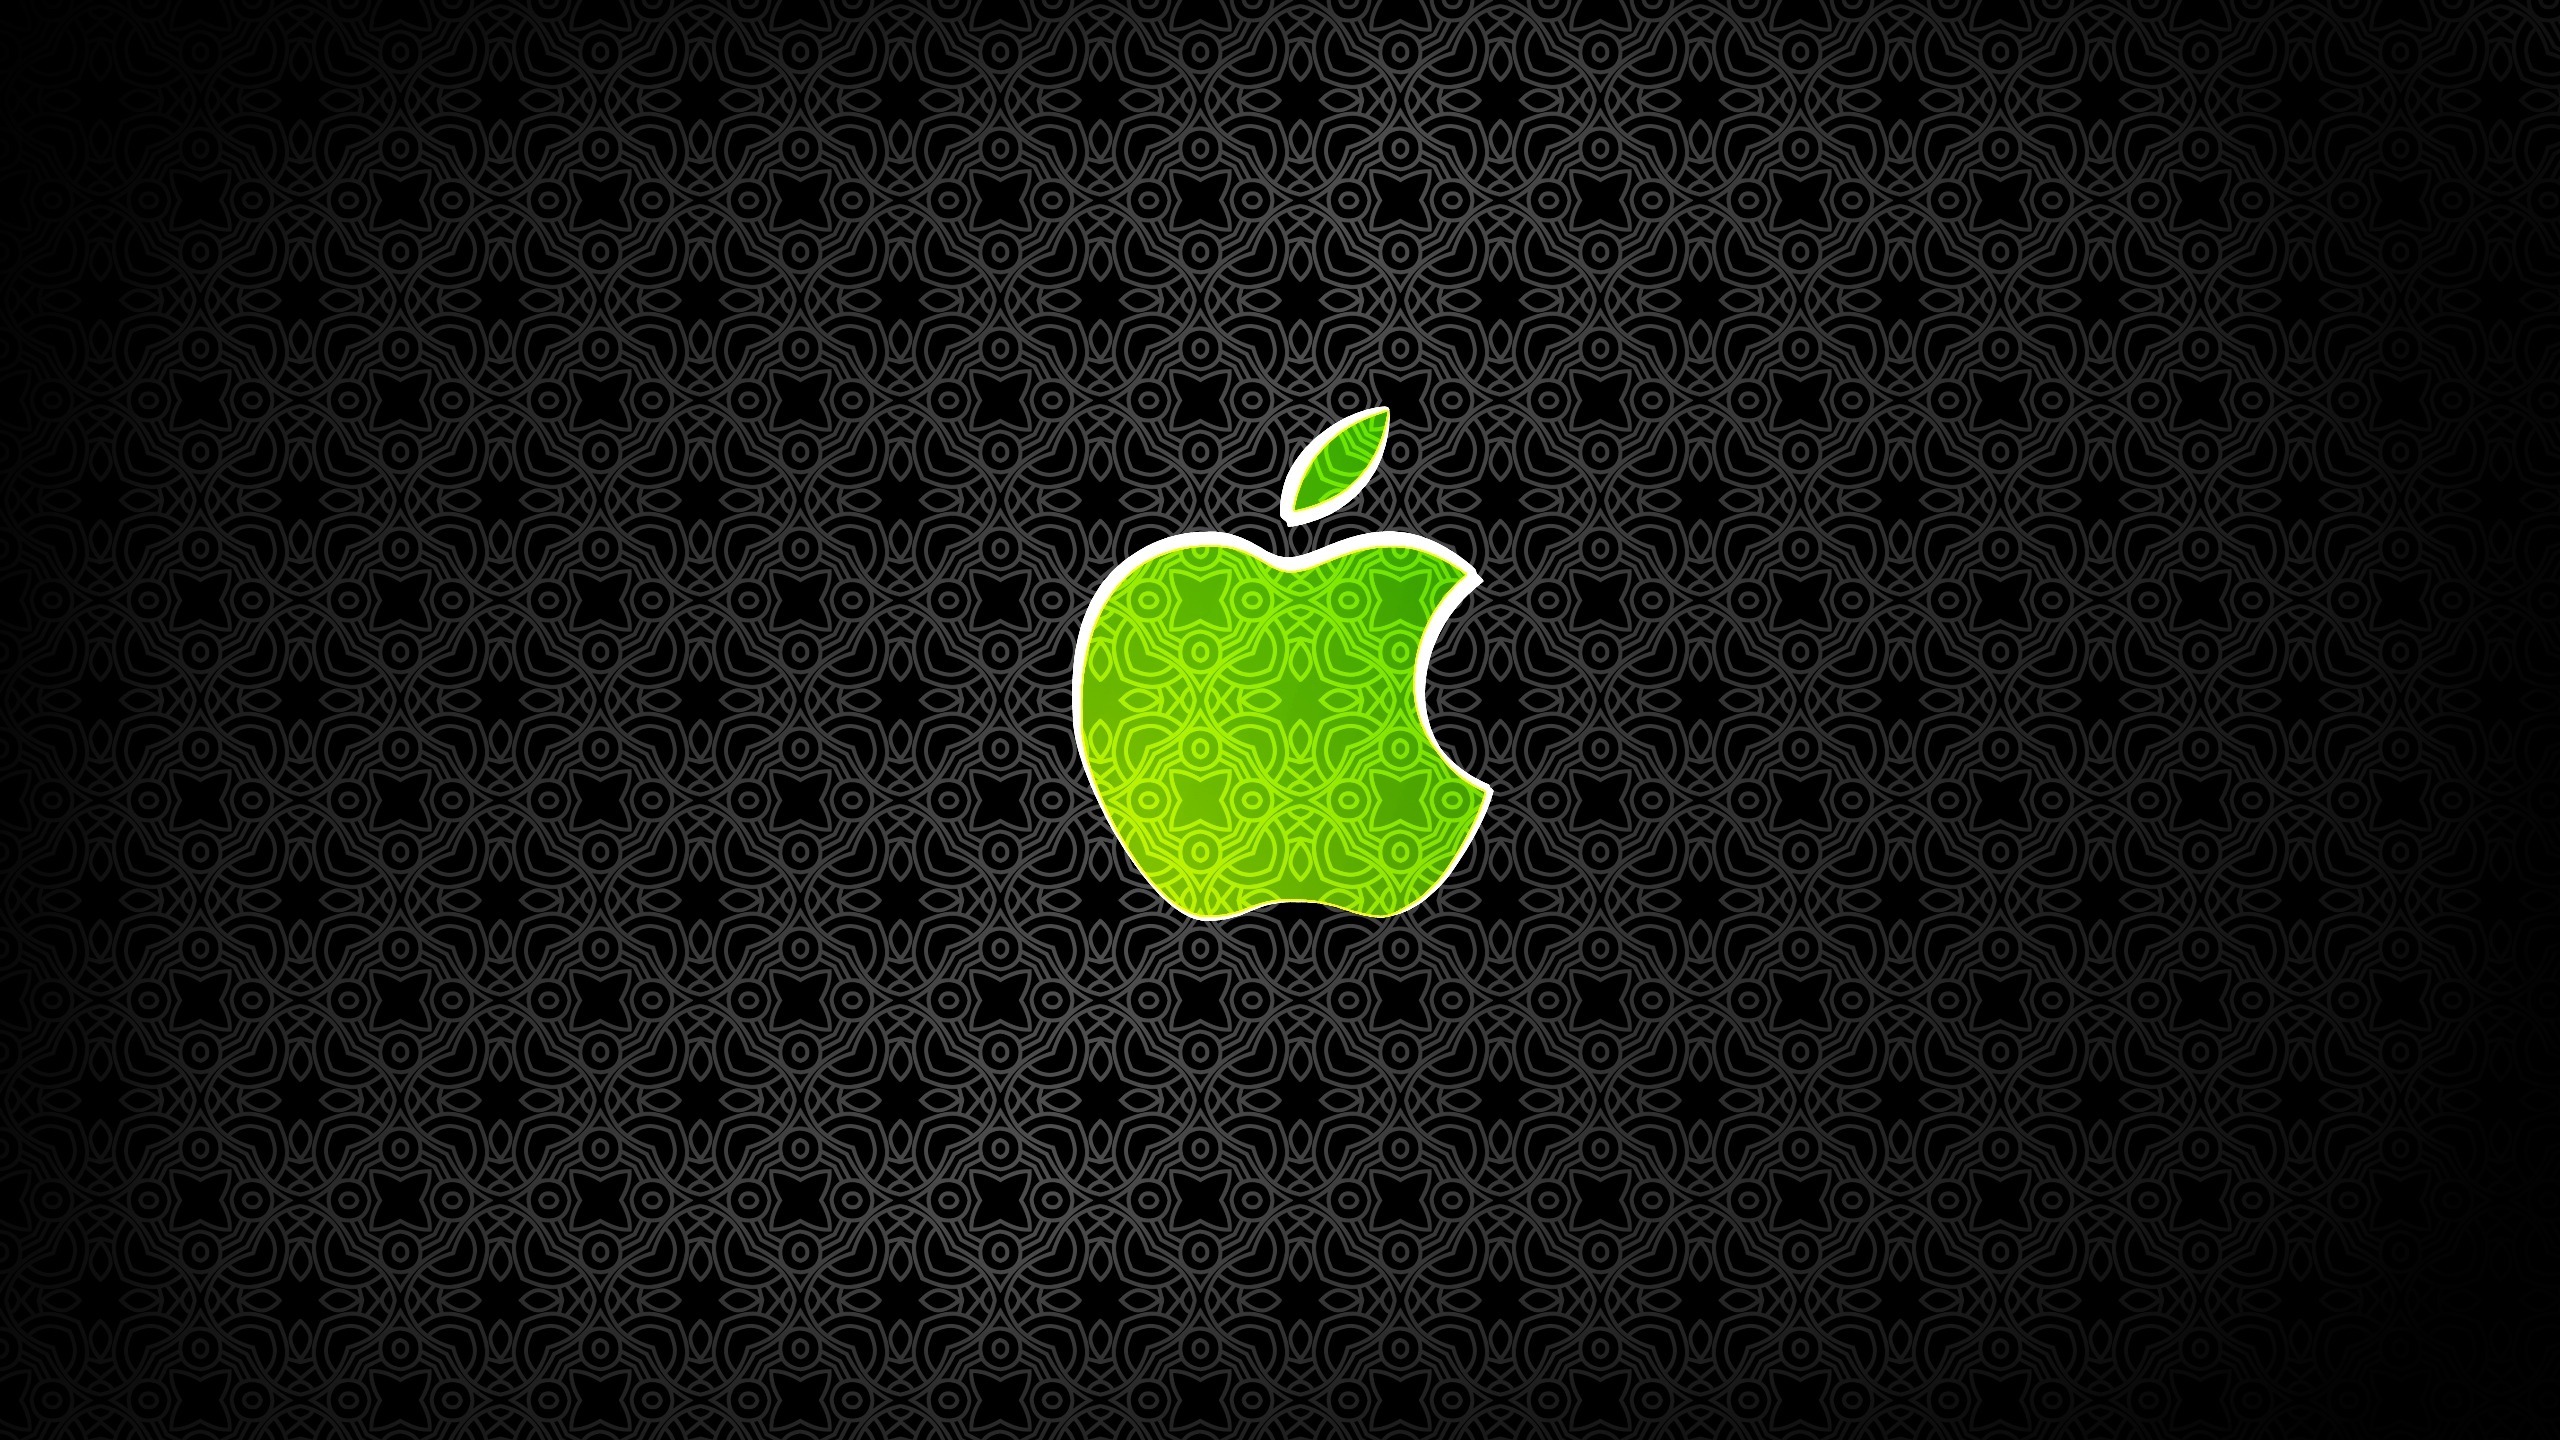 logos, apple, brands, background, black lock screen backgrounds